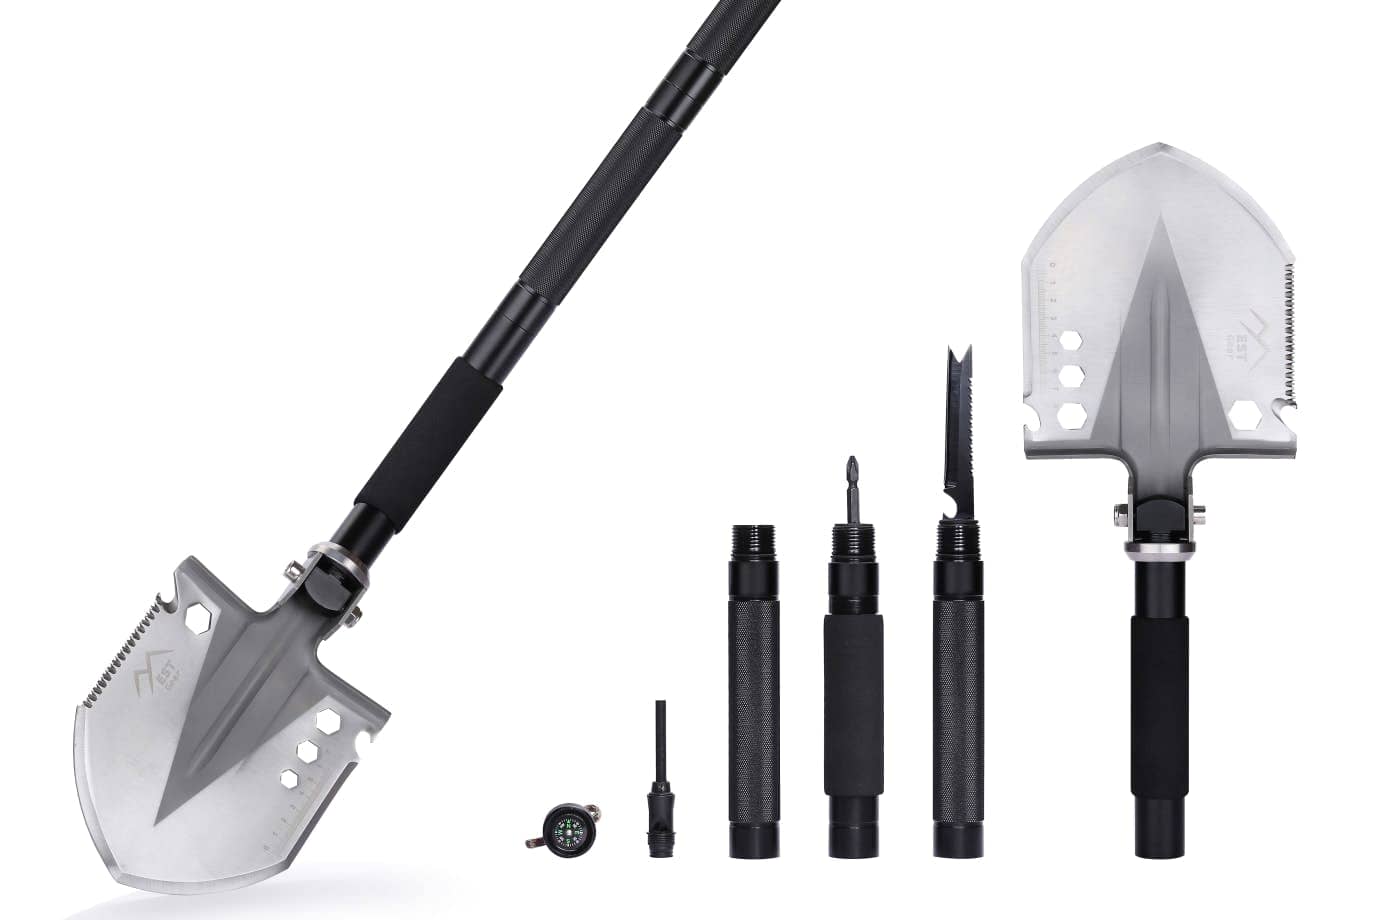 EST Shovel Features 18 Tools And Is A Modular Next-Gen Shovel